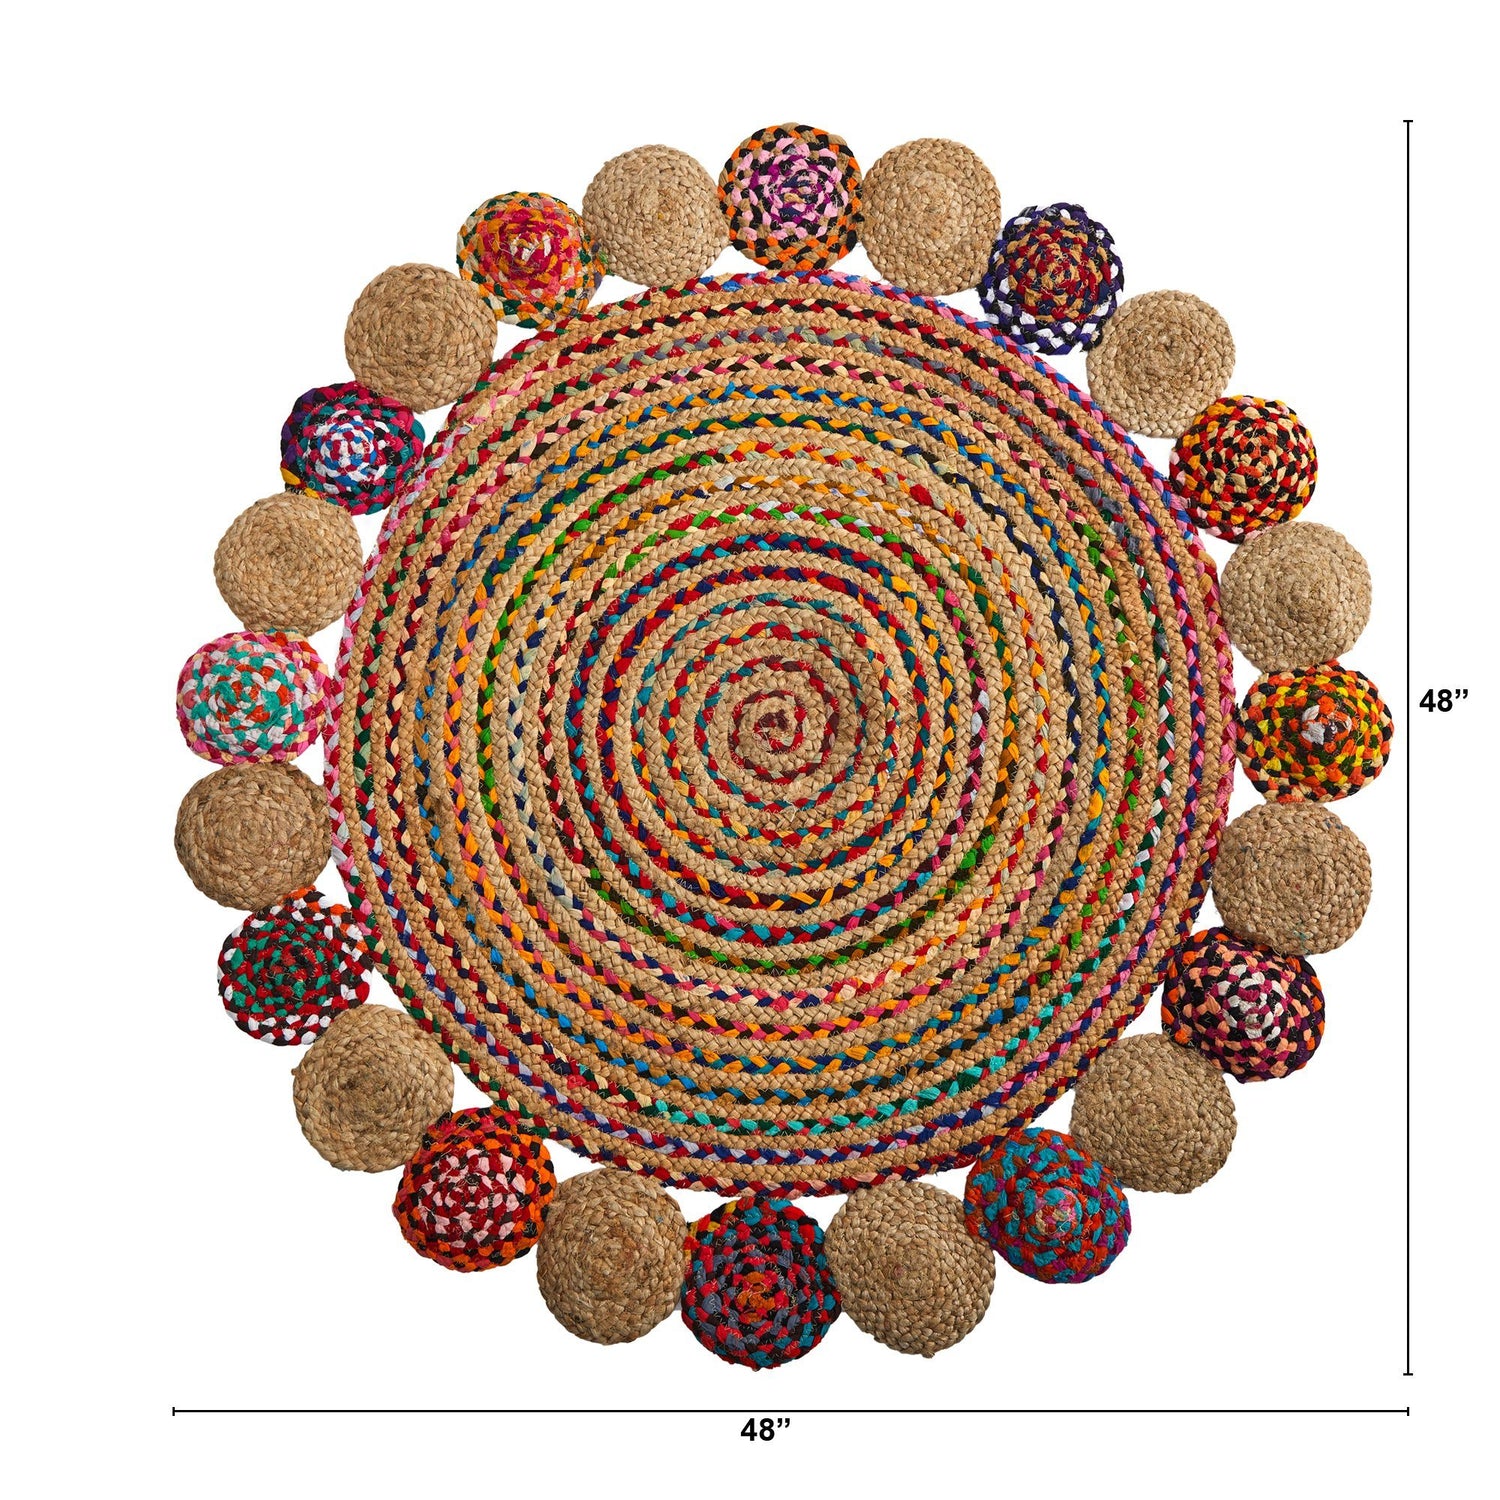 4’ x 4’ Hand Braided Colorful Chindi Jute Mandala Round Rug